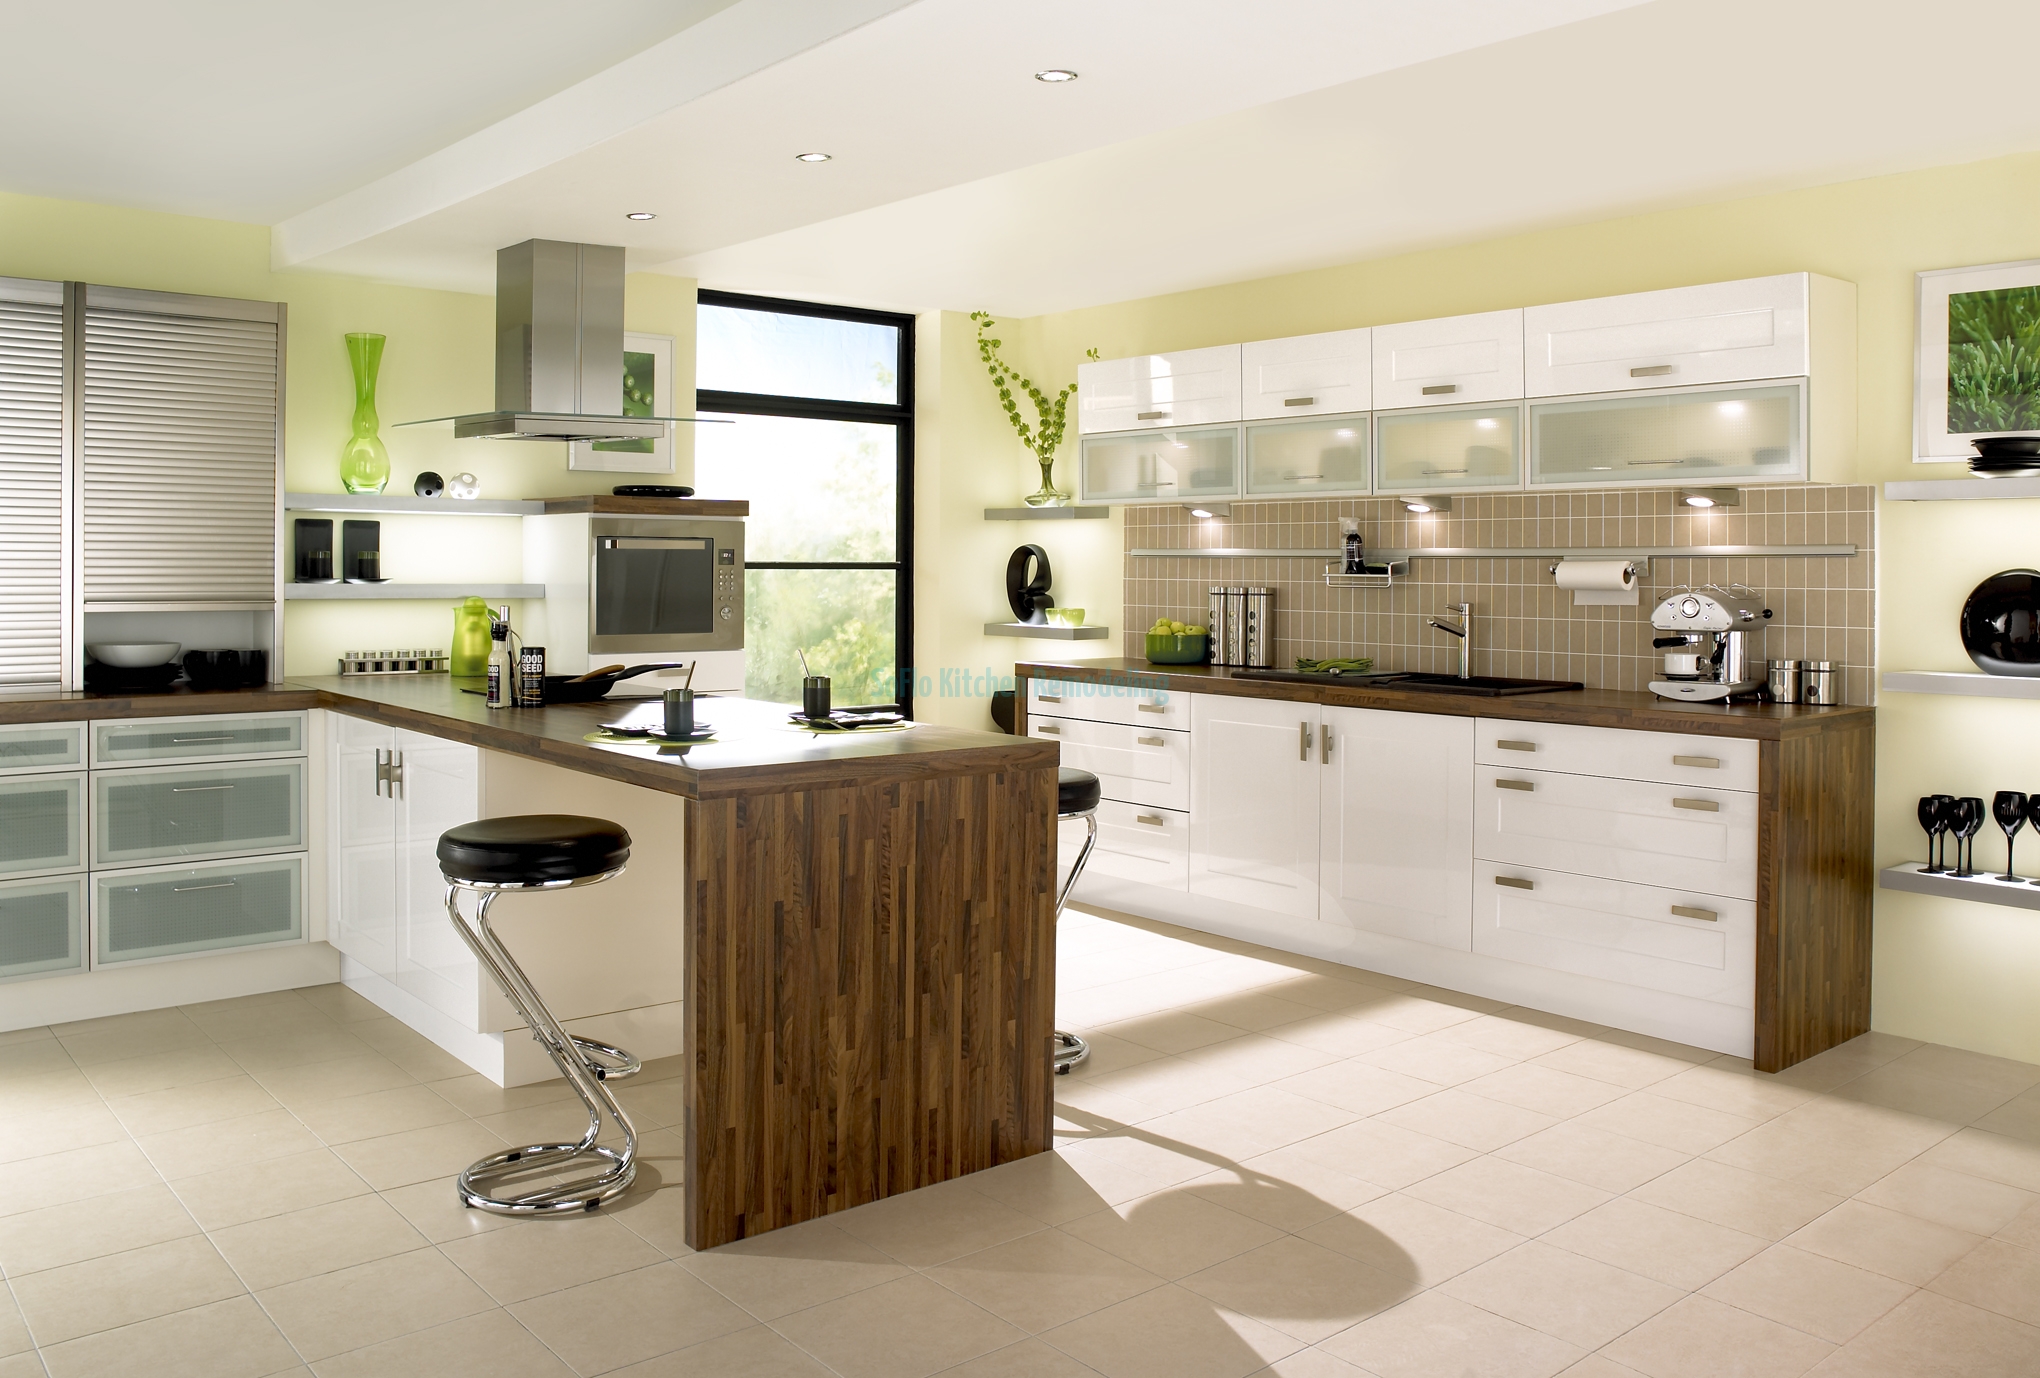 134-Eco-Friendly-Kitchens-SoFlo-Kitchen-Remodeling-Custom-Cabinet-Installation-backsplashes-flooring-countertops